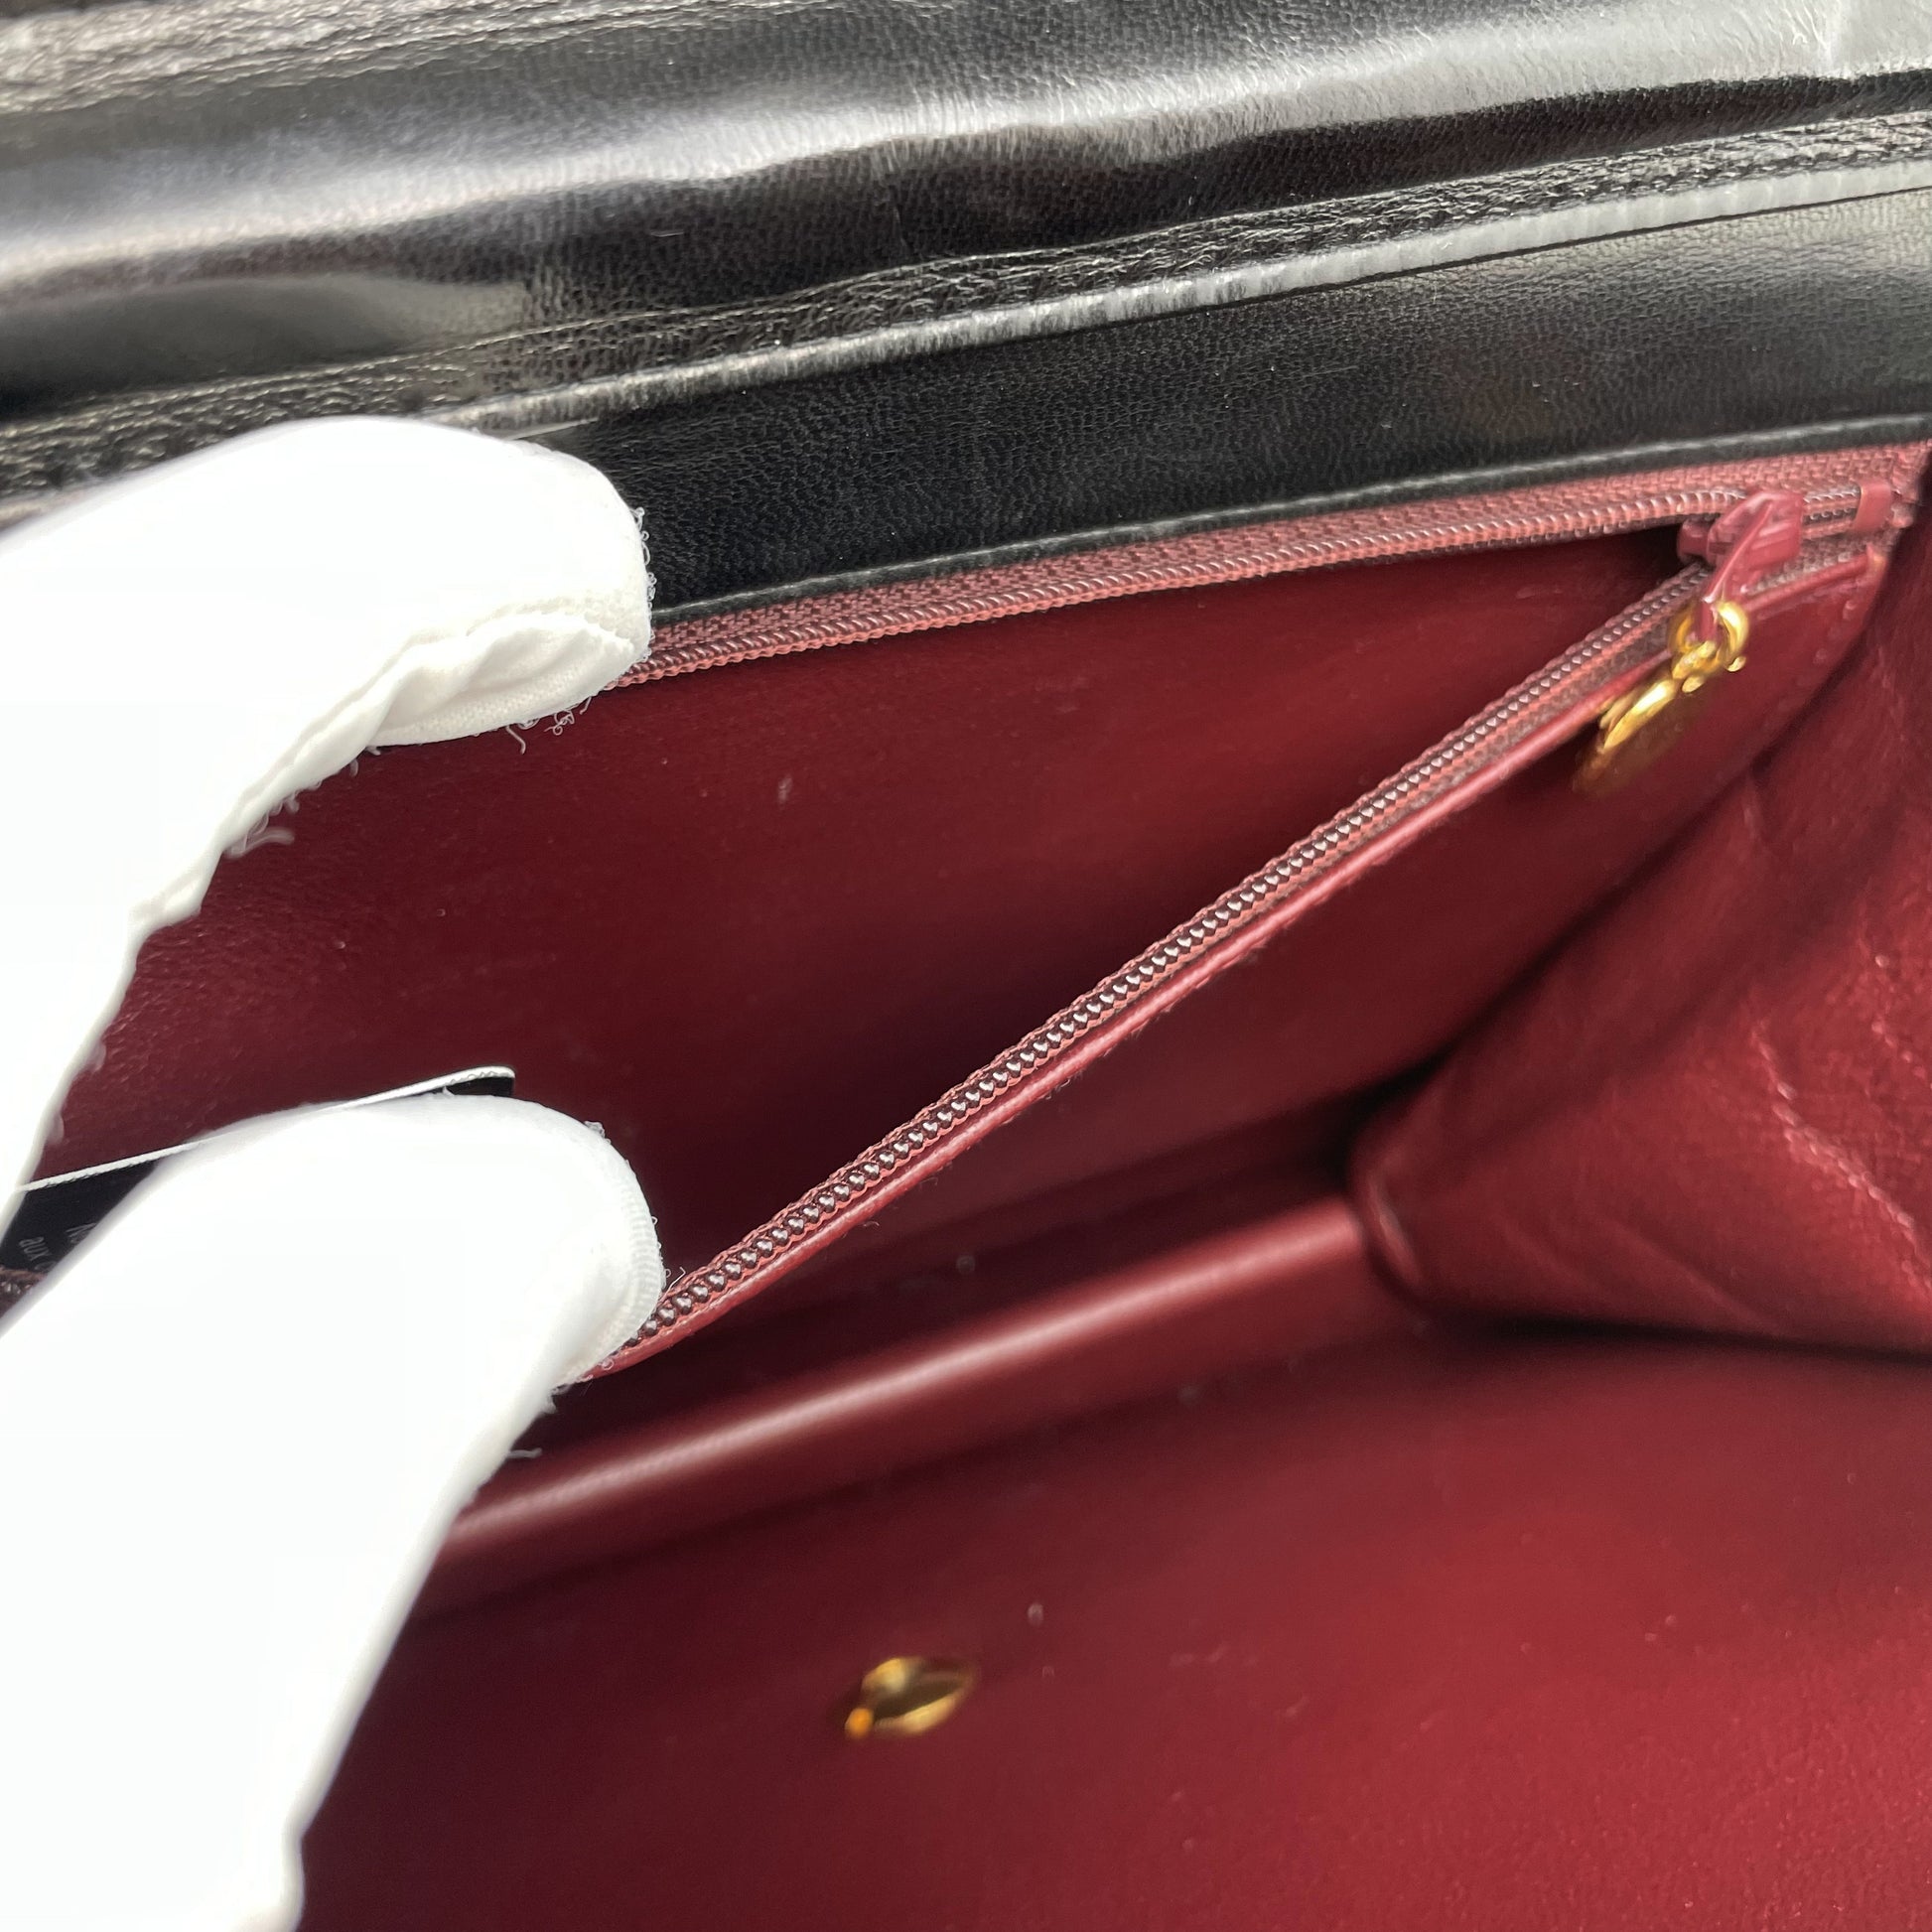 How to Authenticate a Chanel Handbag 